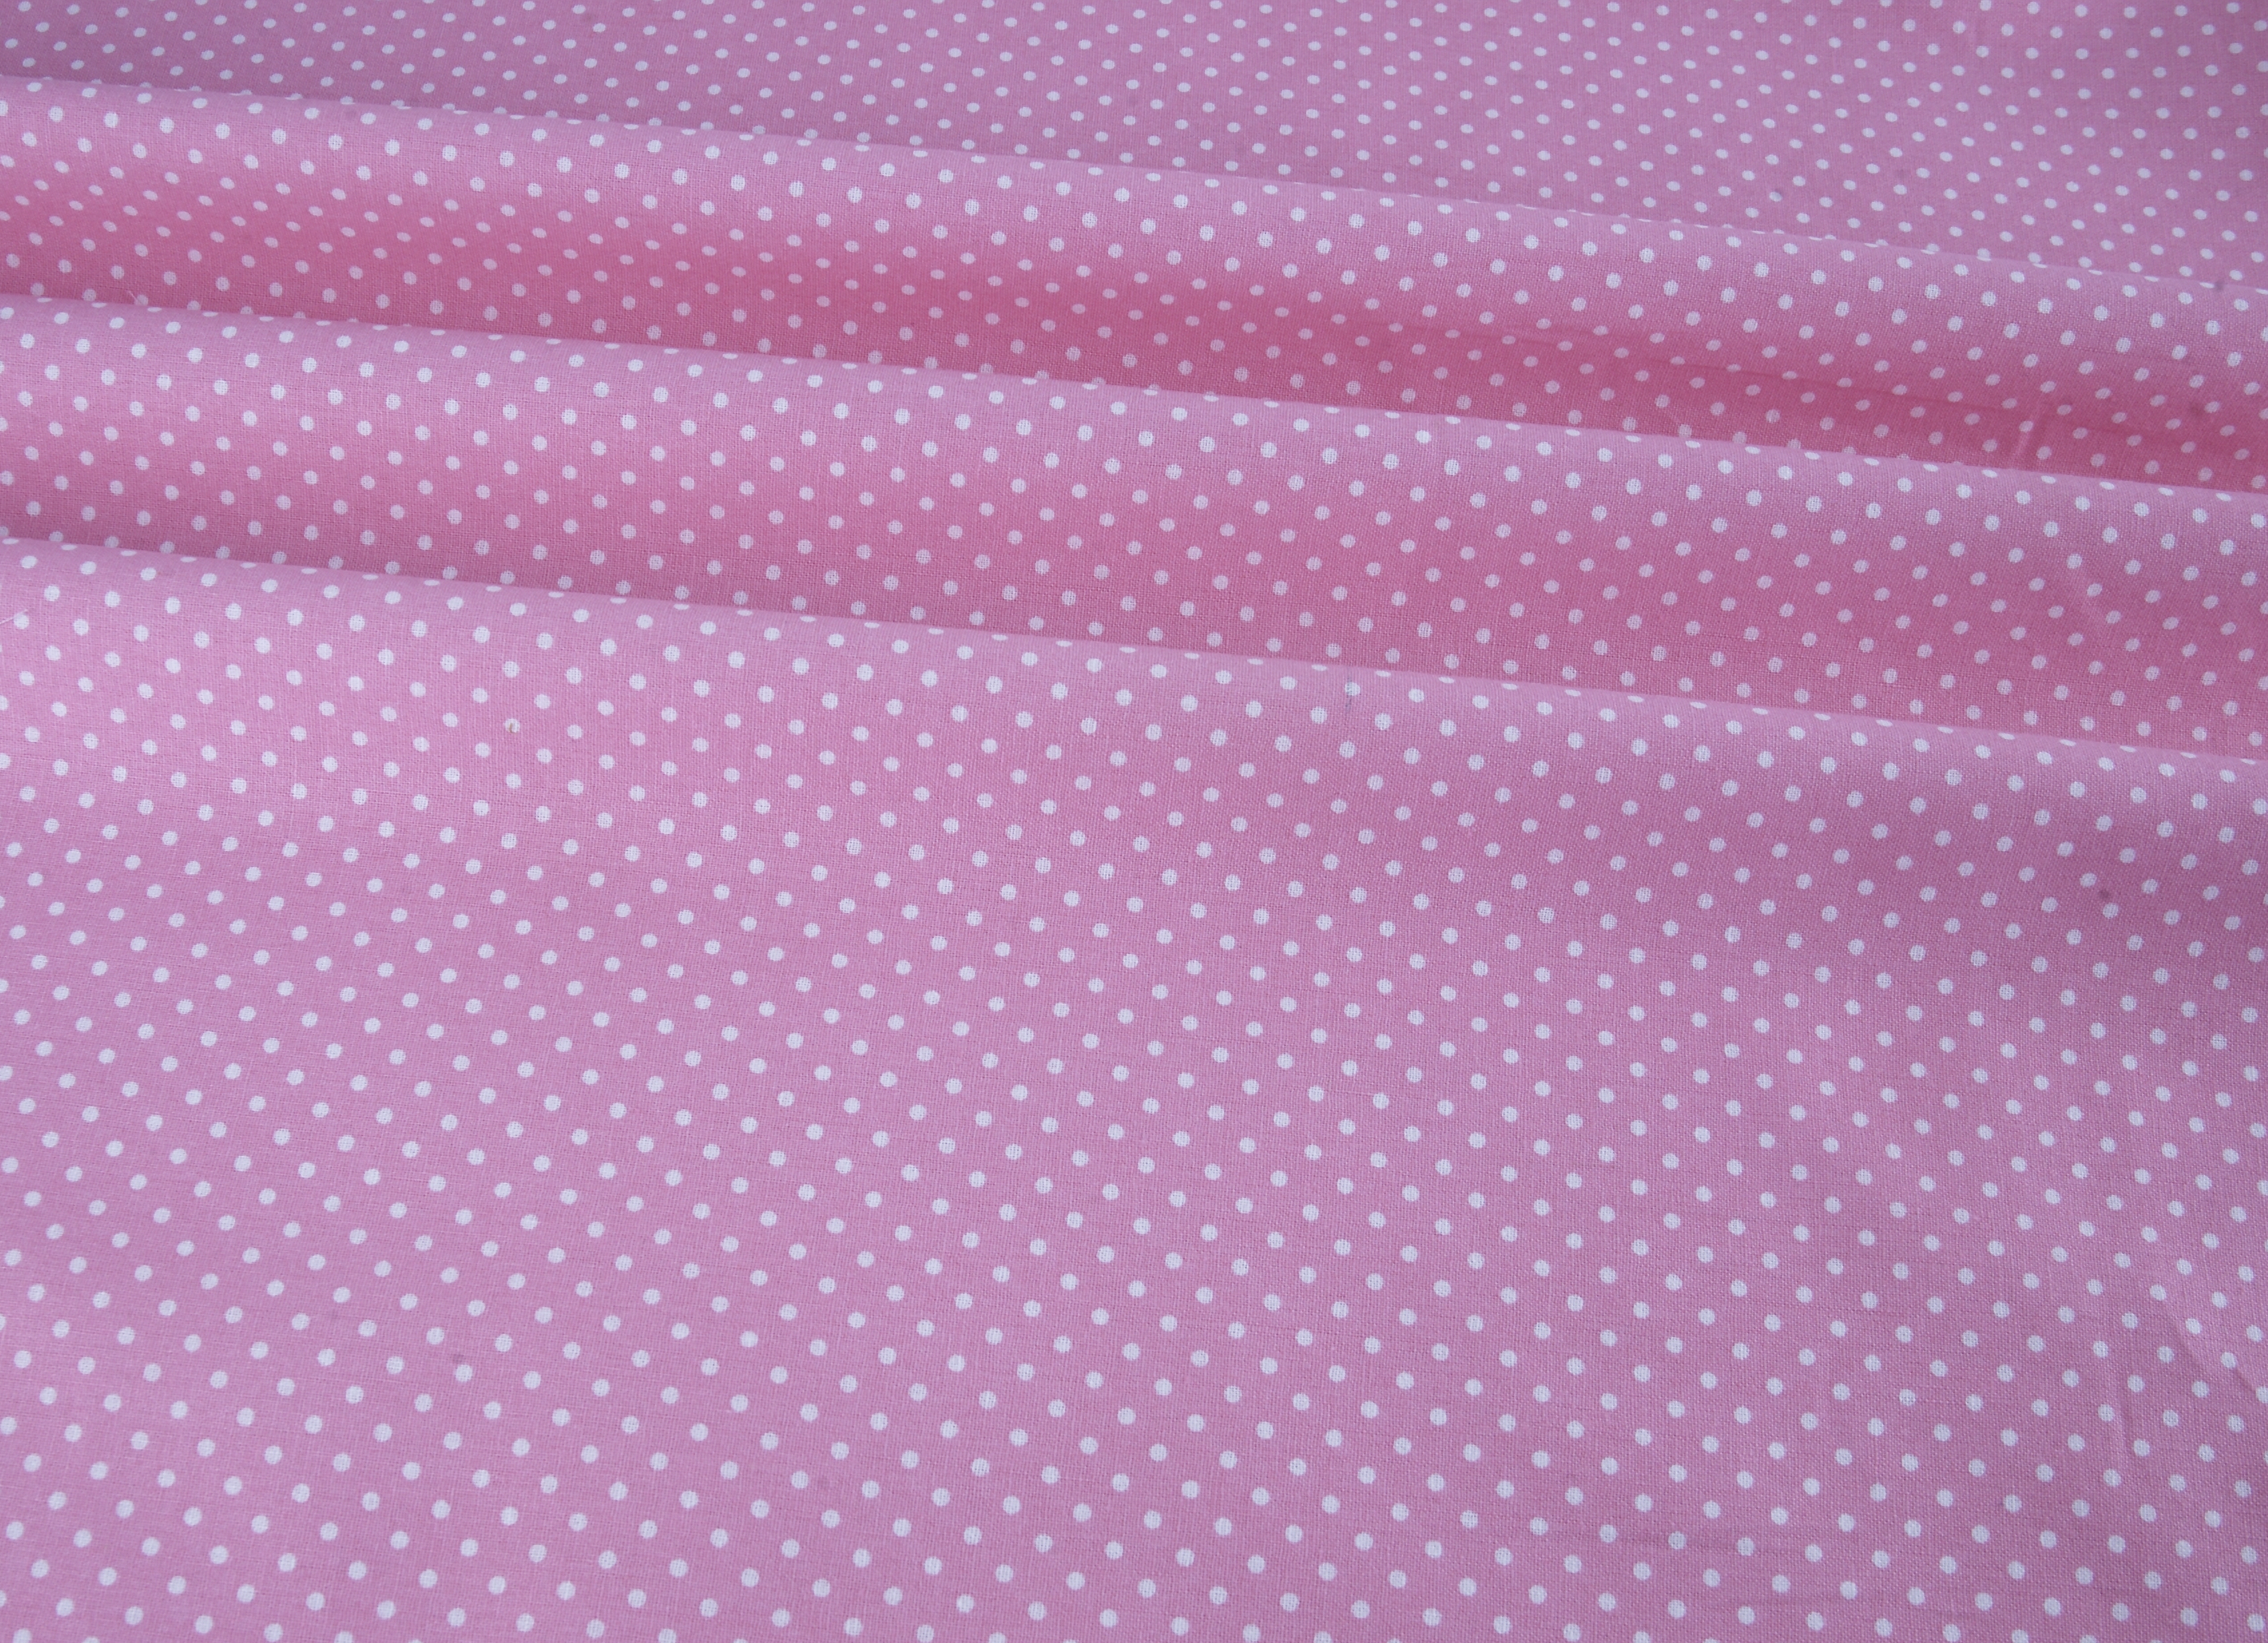 Polka Dot Cotton - Bright Pink